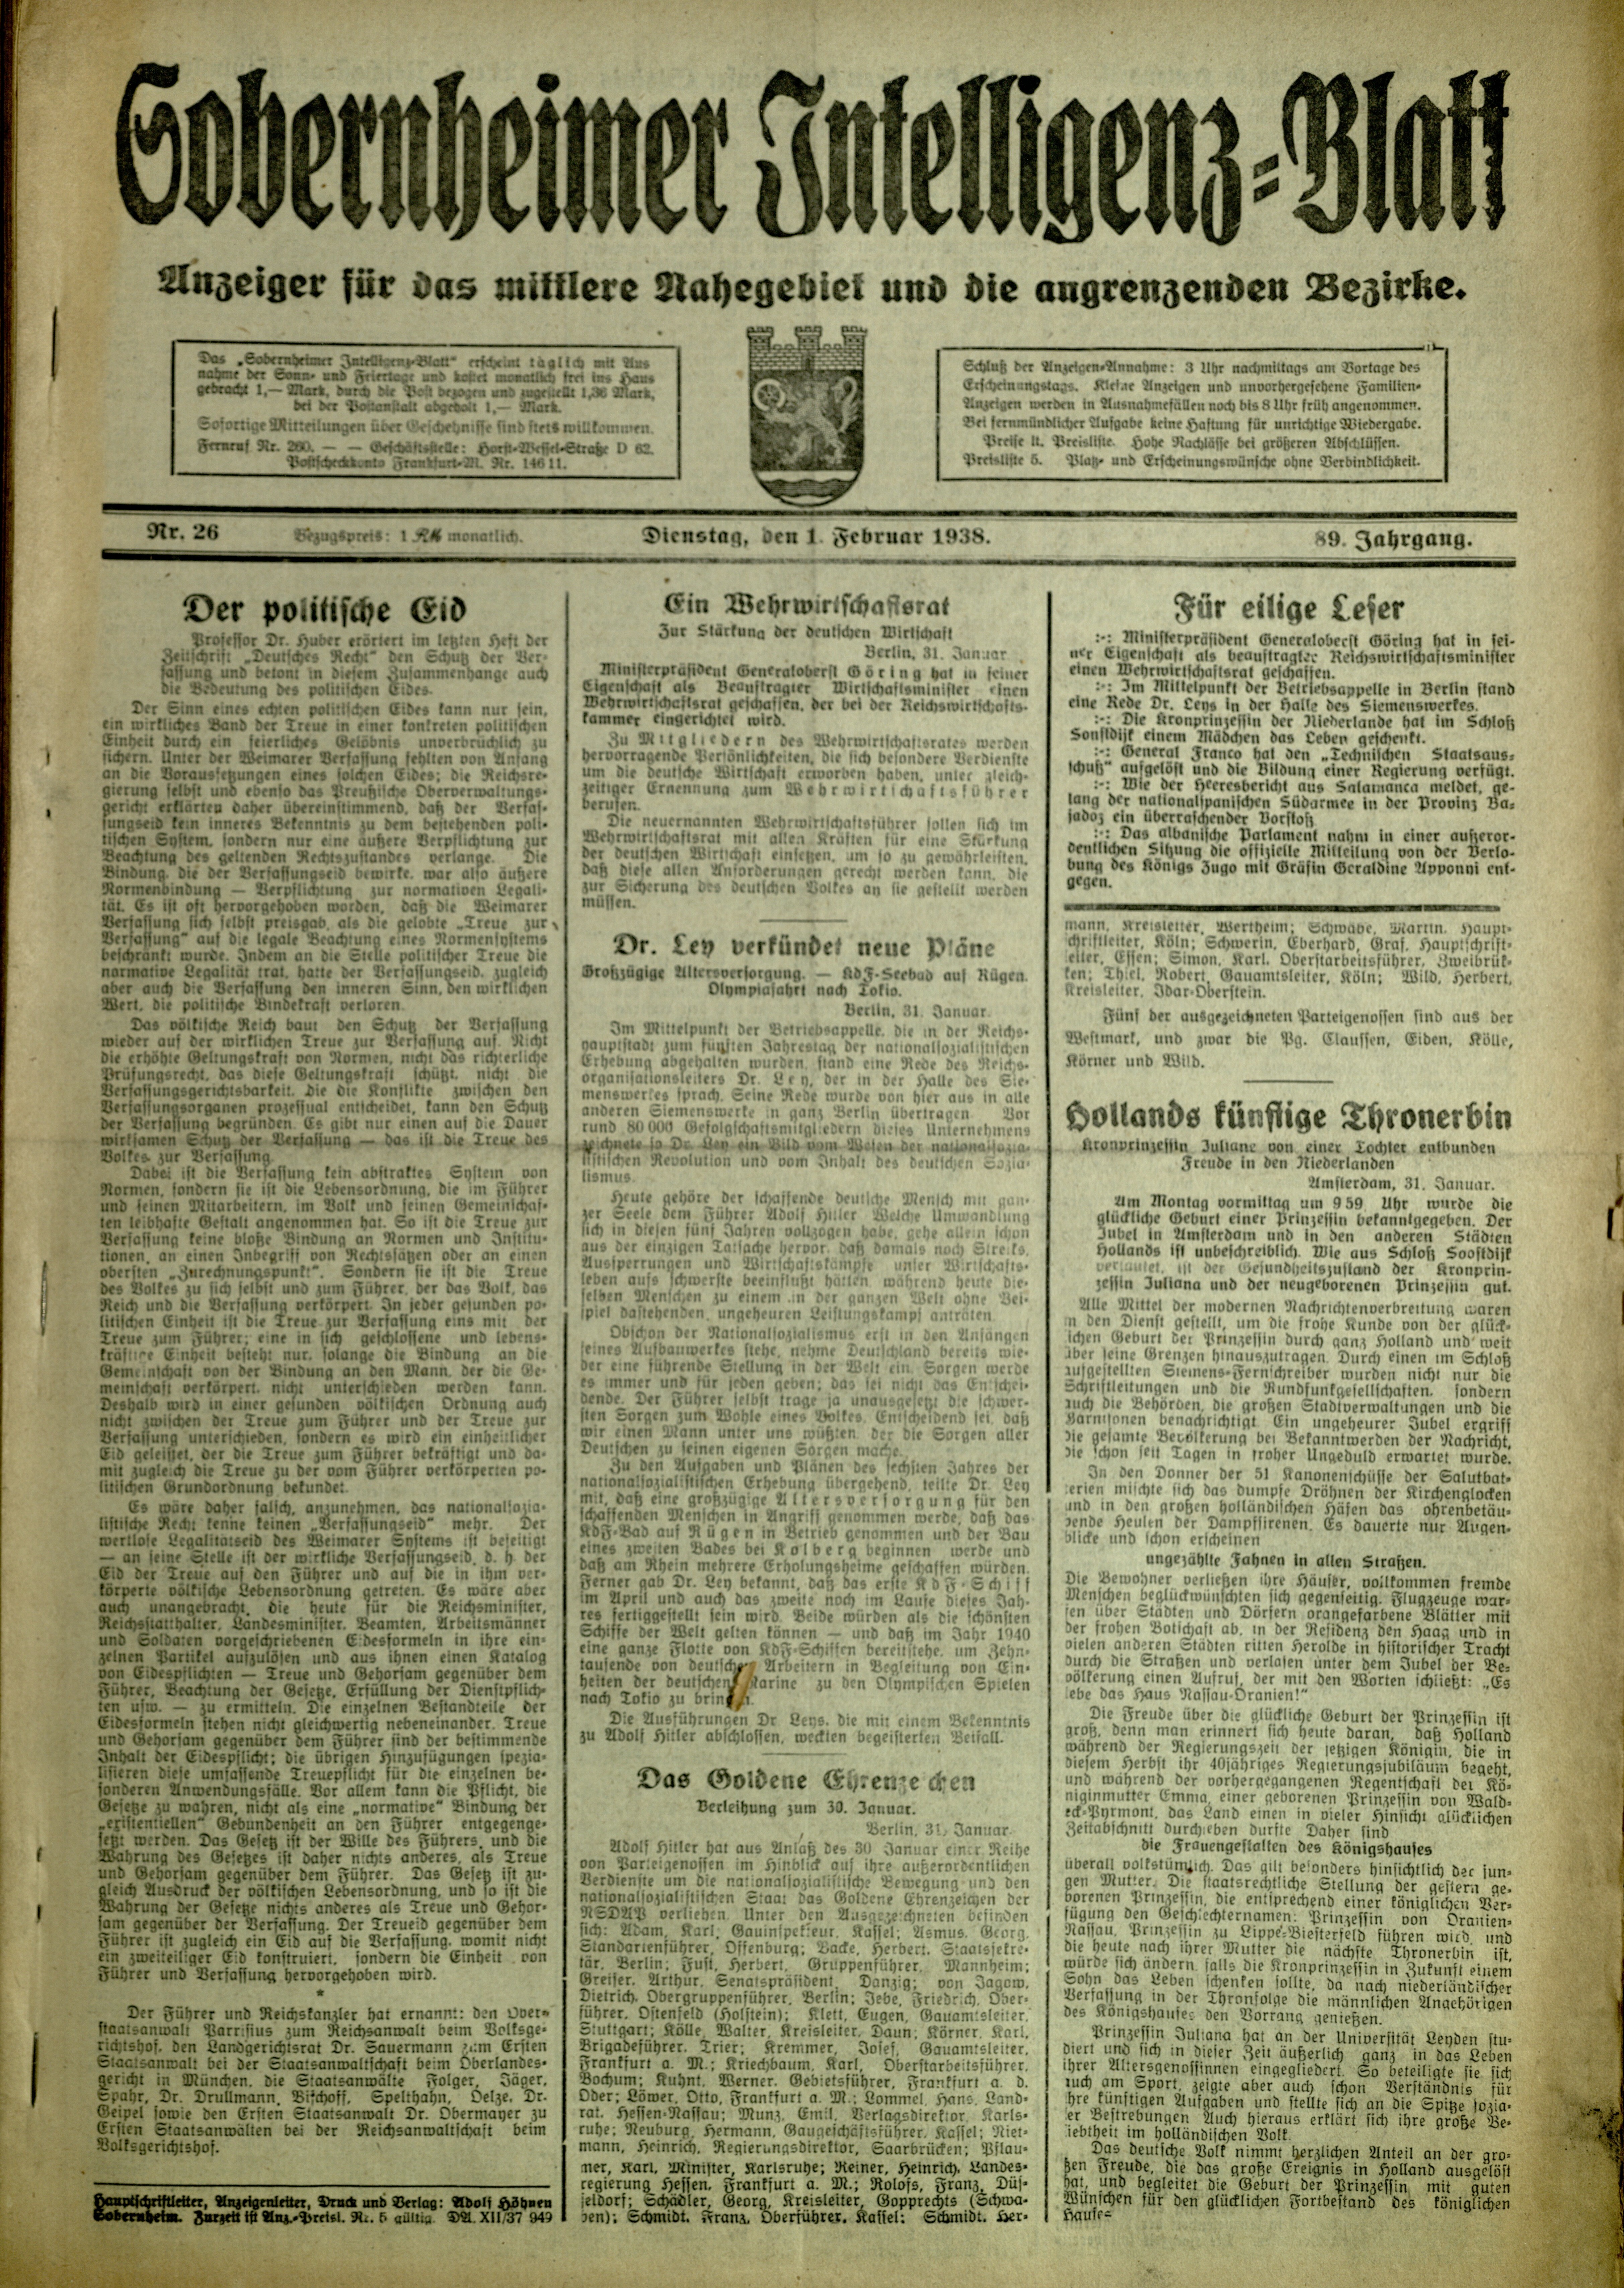 Zeitung: Sobernheimer Intelligenzblatt; Februar 1938, Jg. 88 Nr. 26 (Heimatmuseum Bad Sobernheim CC BY-NC-SA)